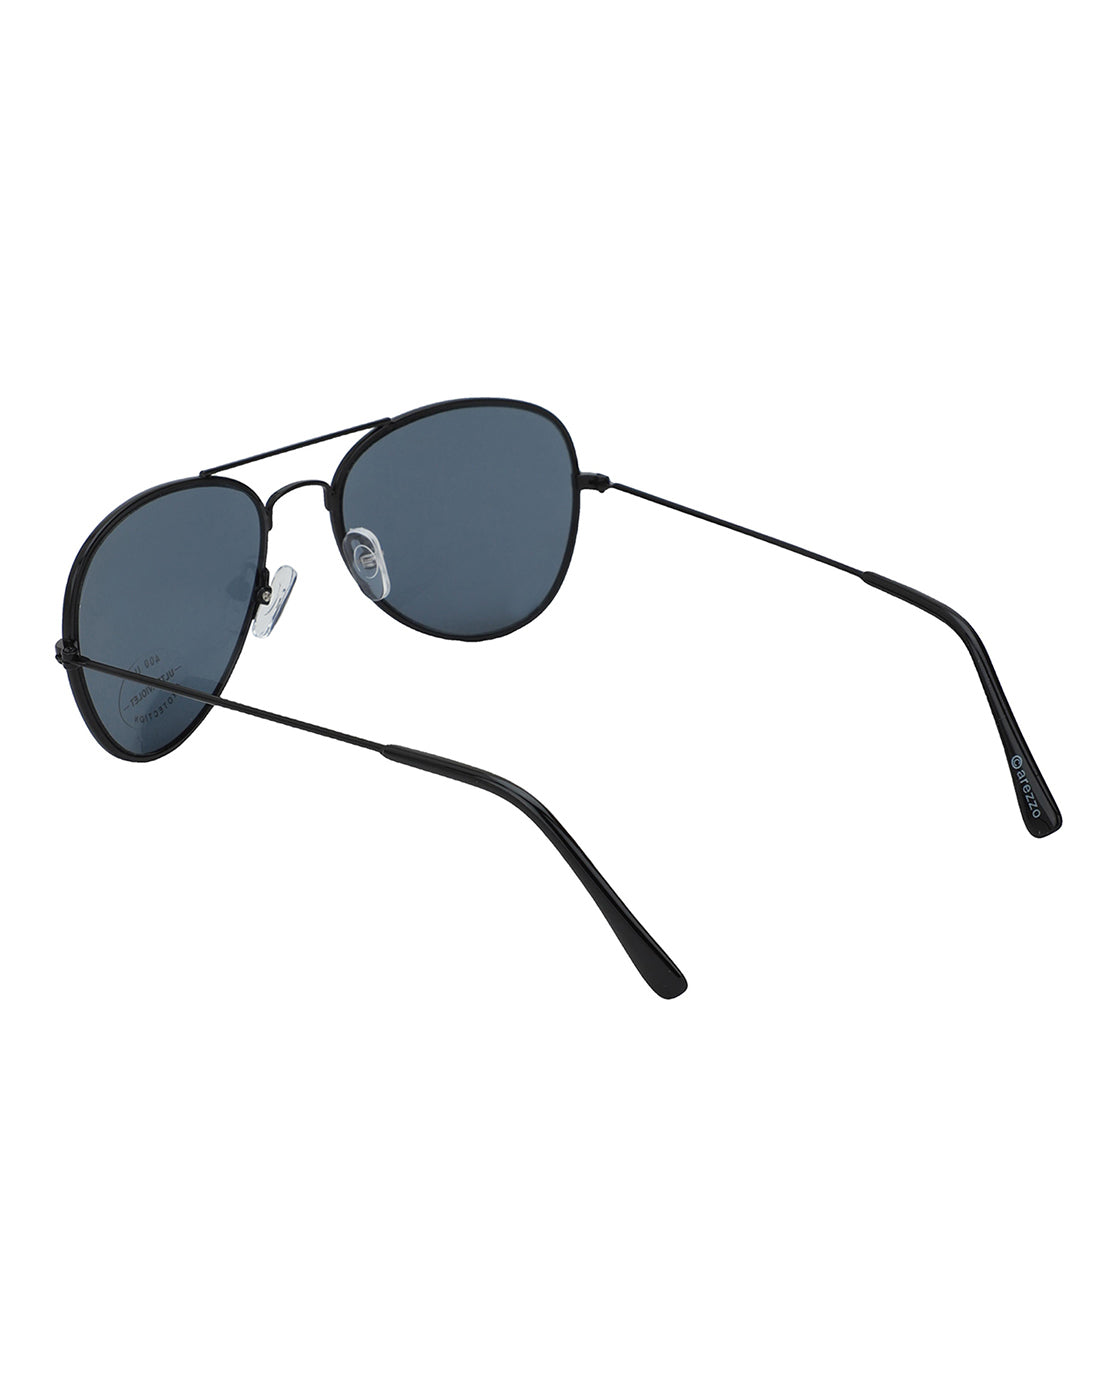 Carlton London Blue Lens &amp; Black Aviator Sunglasses With Uv Protected Lens For Boy